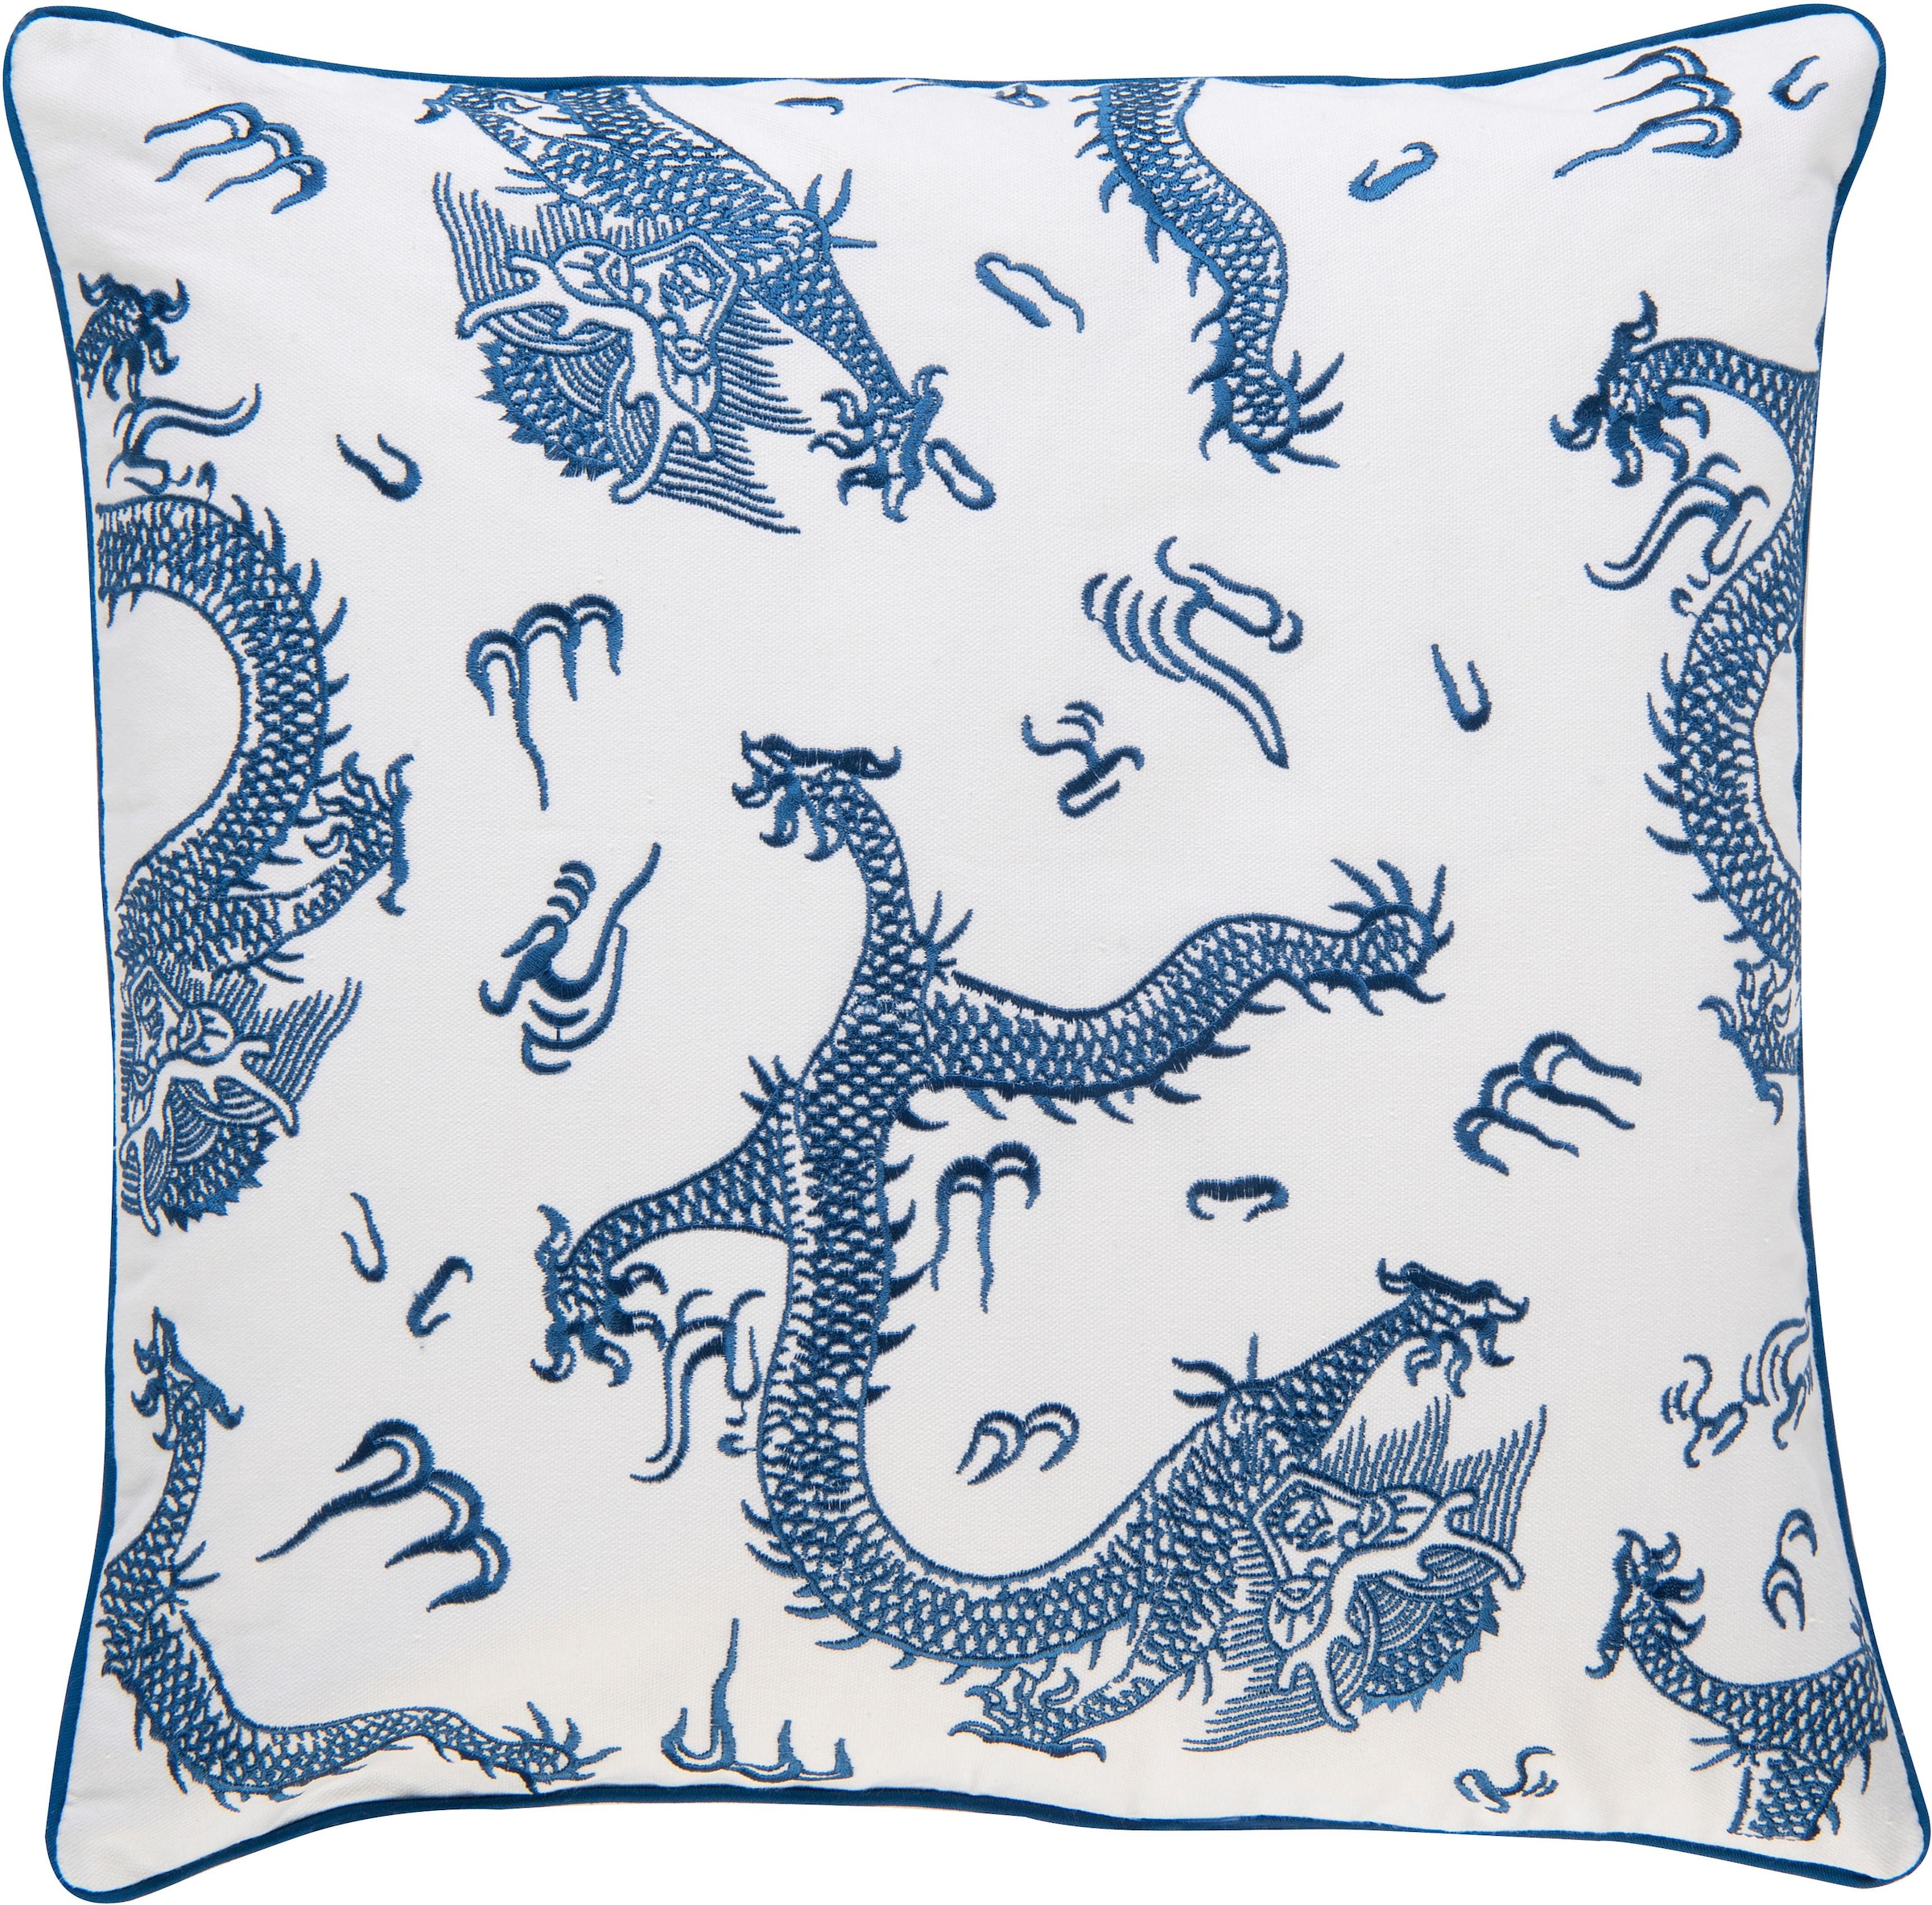 BARBARA Home Collection Dekokissen »Dragon 01 blau-weiss«, Kissenhülle ohne Füllung aus besticktem Leinwandgewebe, 50x50 cm